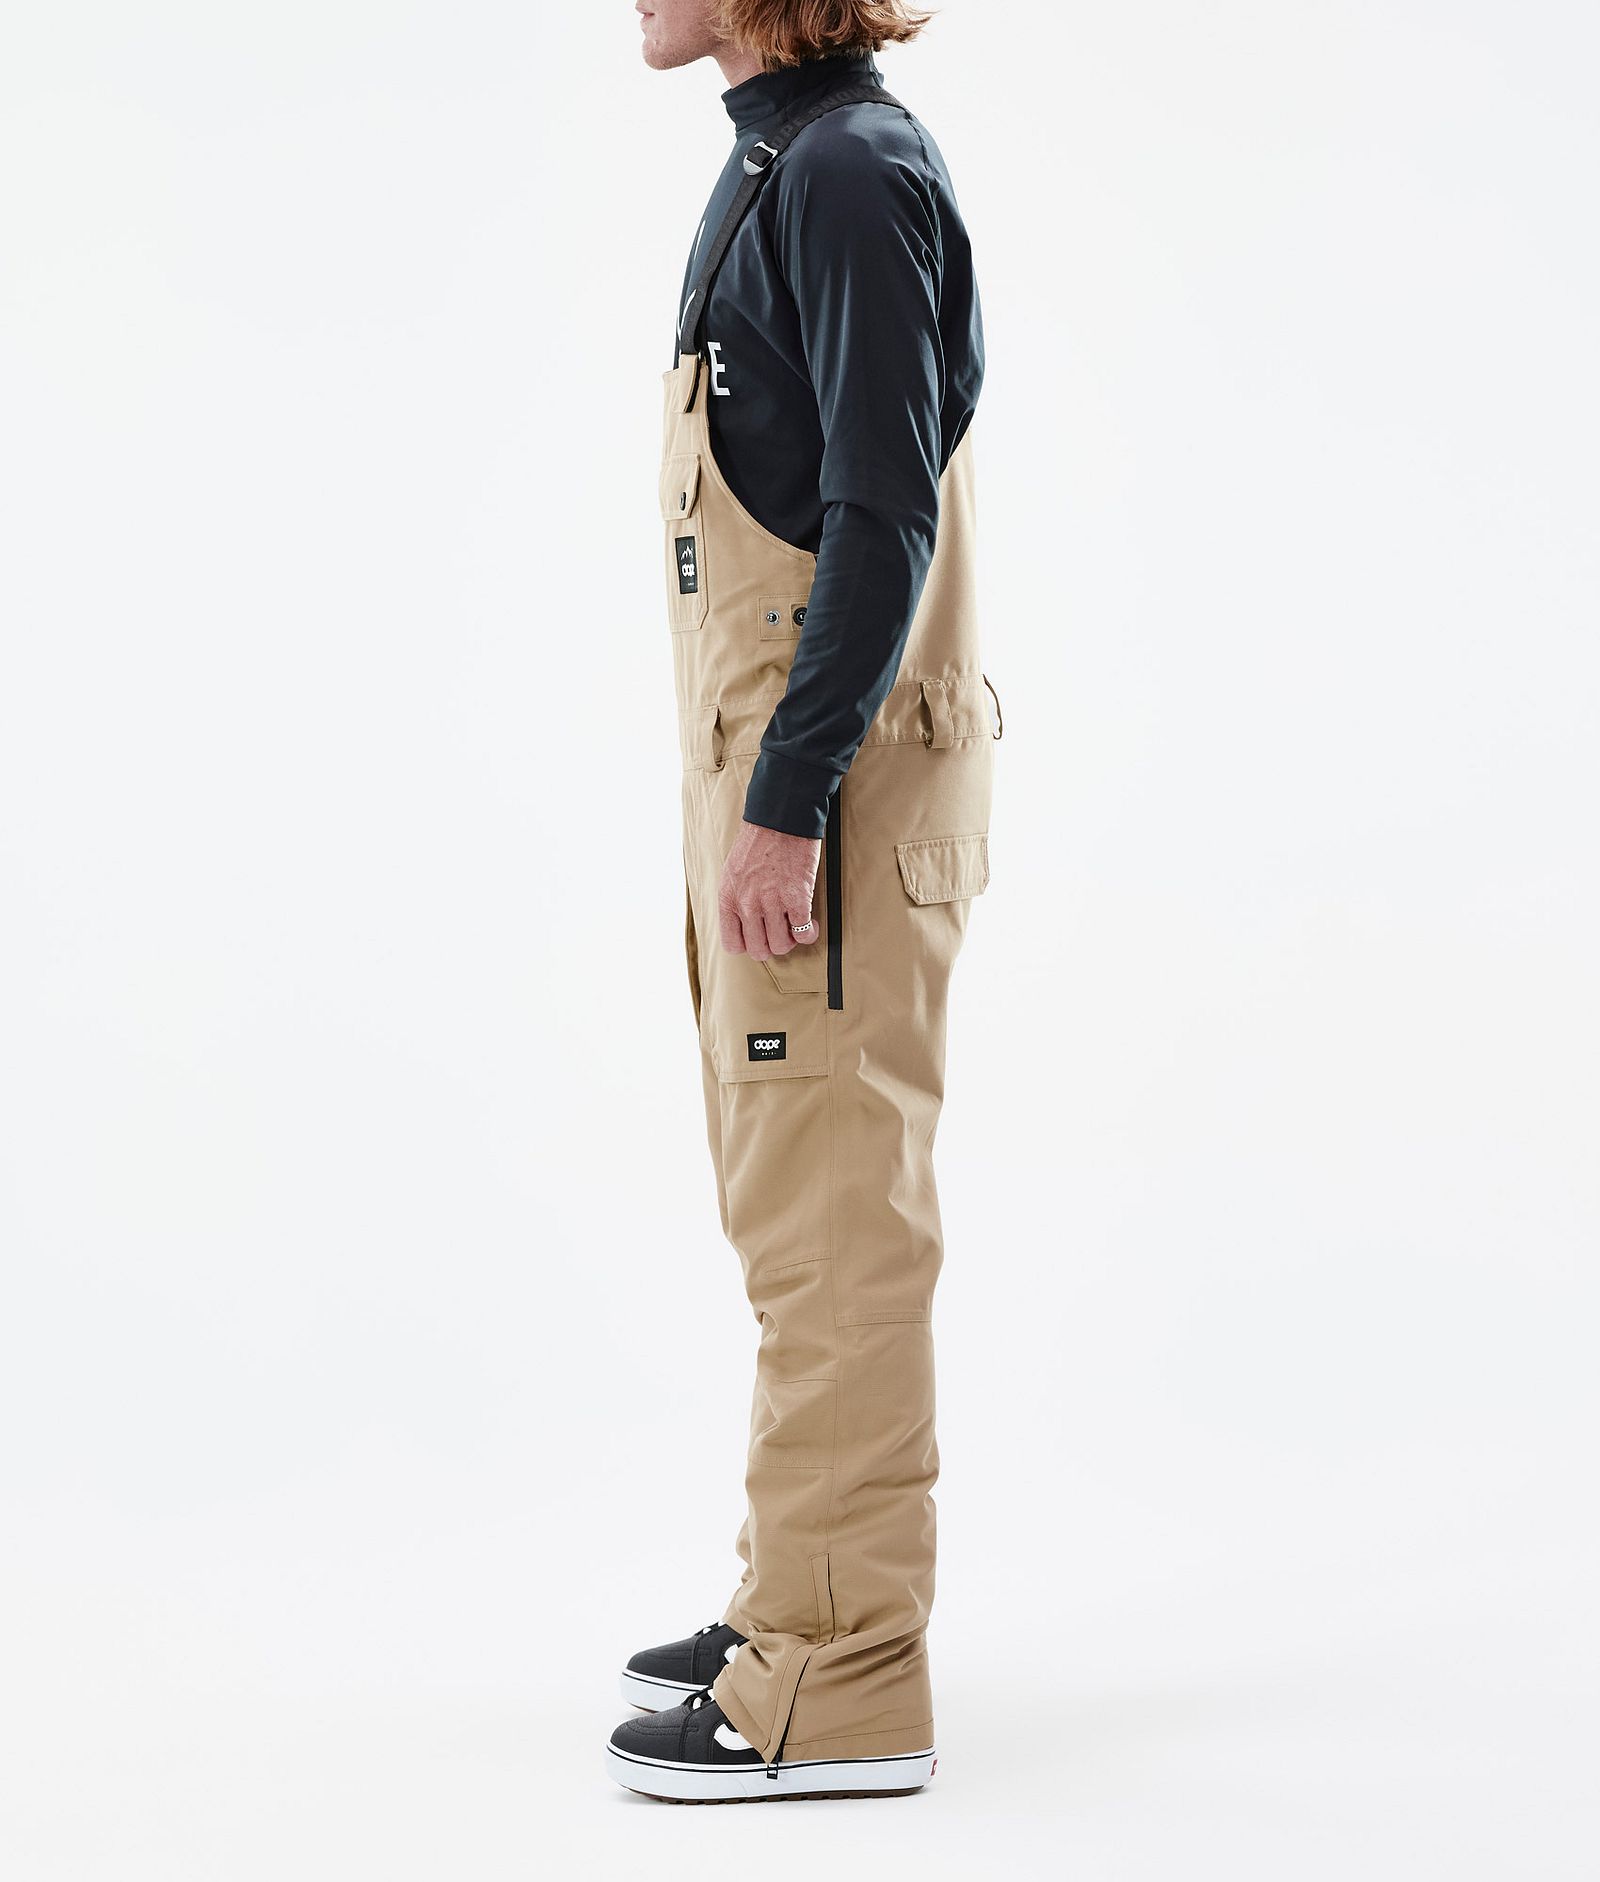 Notorious B.I.B 2022 Pantalon de Snowboard Homme Khaki, Image 2 sur 6